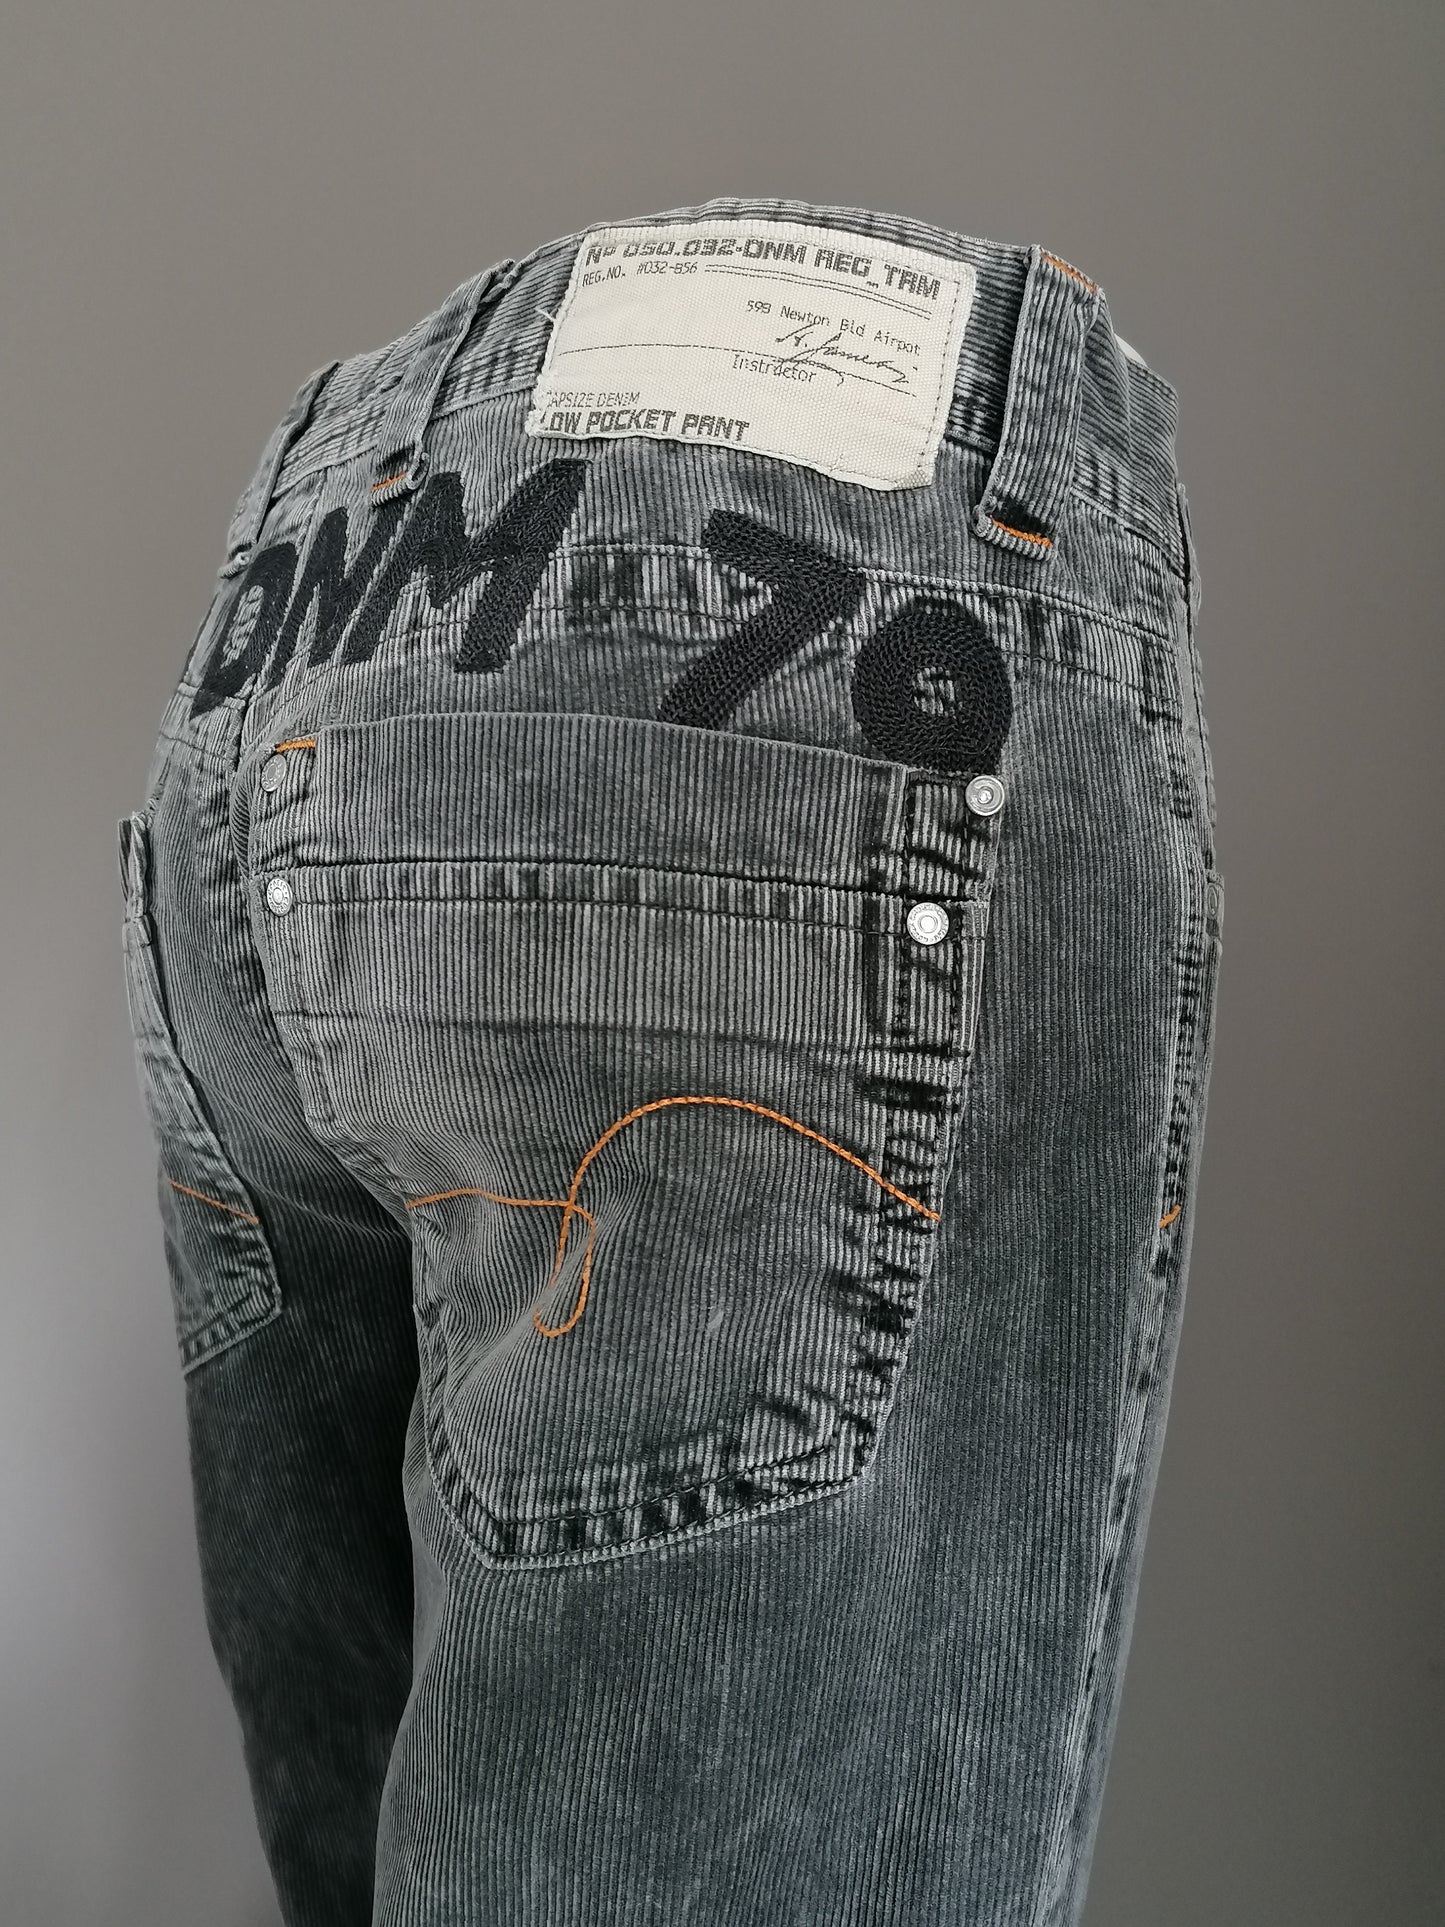 Capsize rib pants. Dark gray colored. Size W30 - L34. Type Low Pocket.